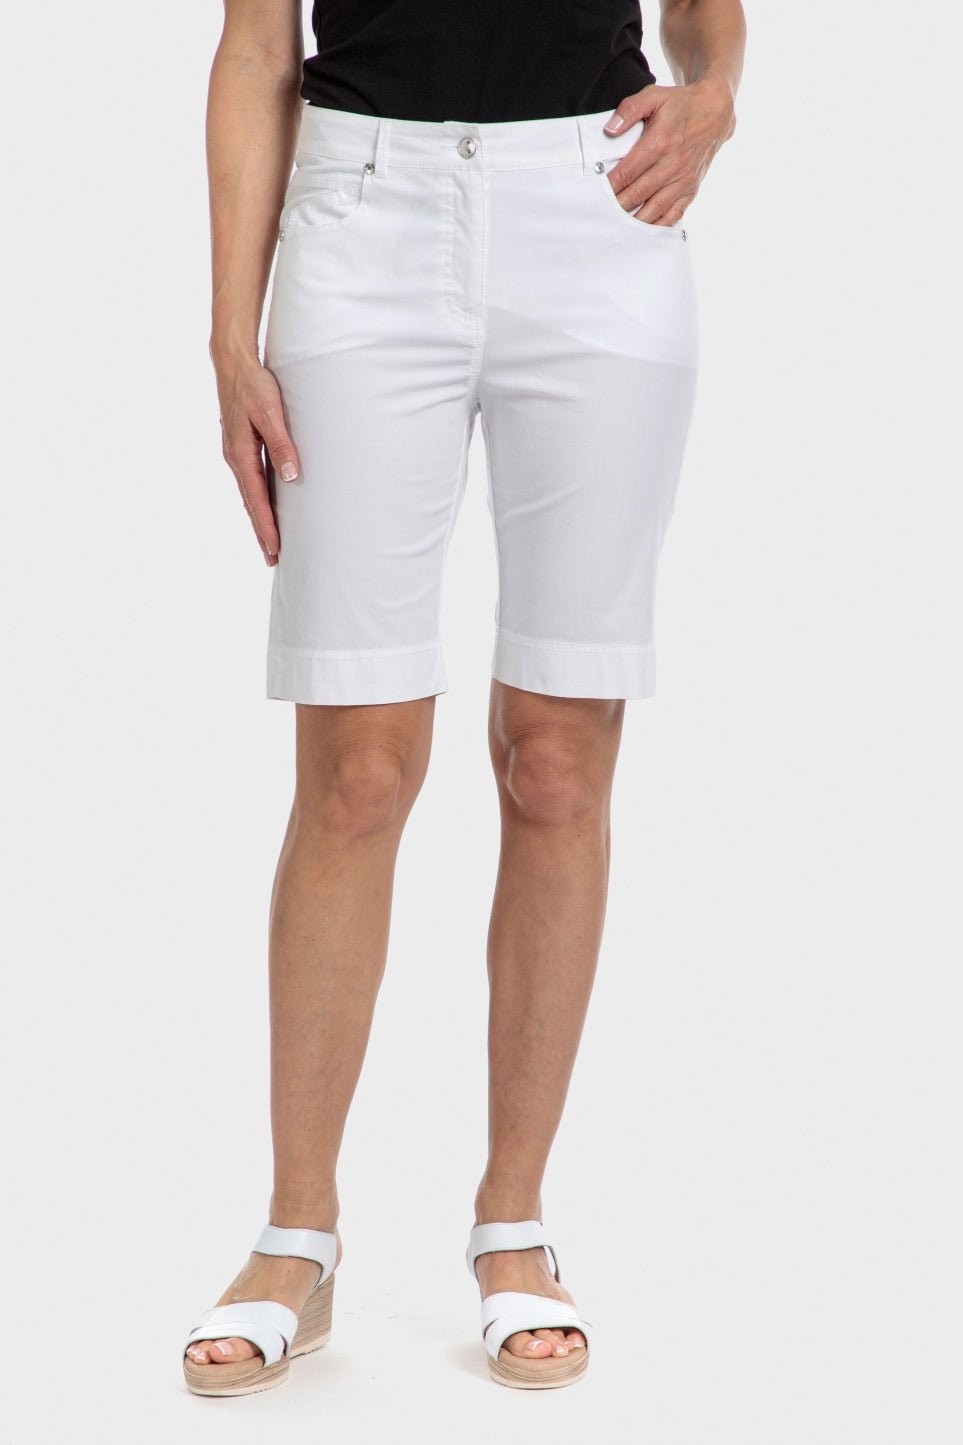 PUNT ROMA - מכנסיים קצרים בצבע לבן - MASHBIR//365